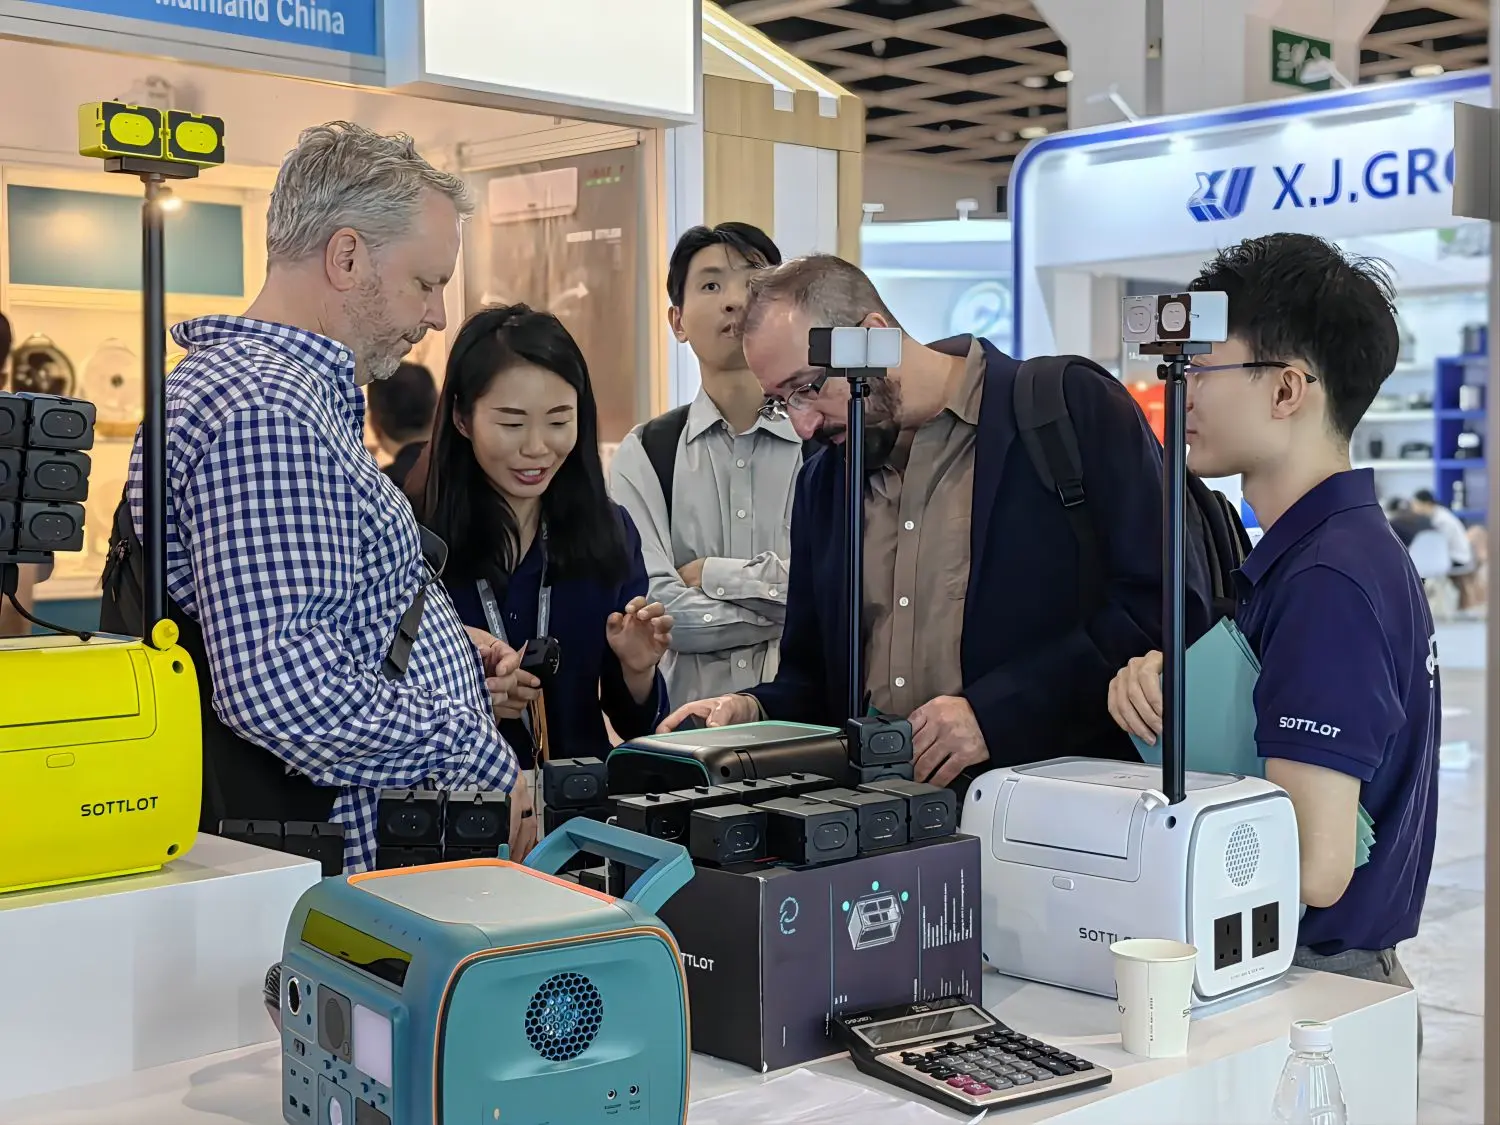 SOTTLOT New Energy's Alpha800 Portable Power Station erregt Aufmerksamkeit auf der Elektronikmesse in Hongkong